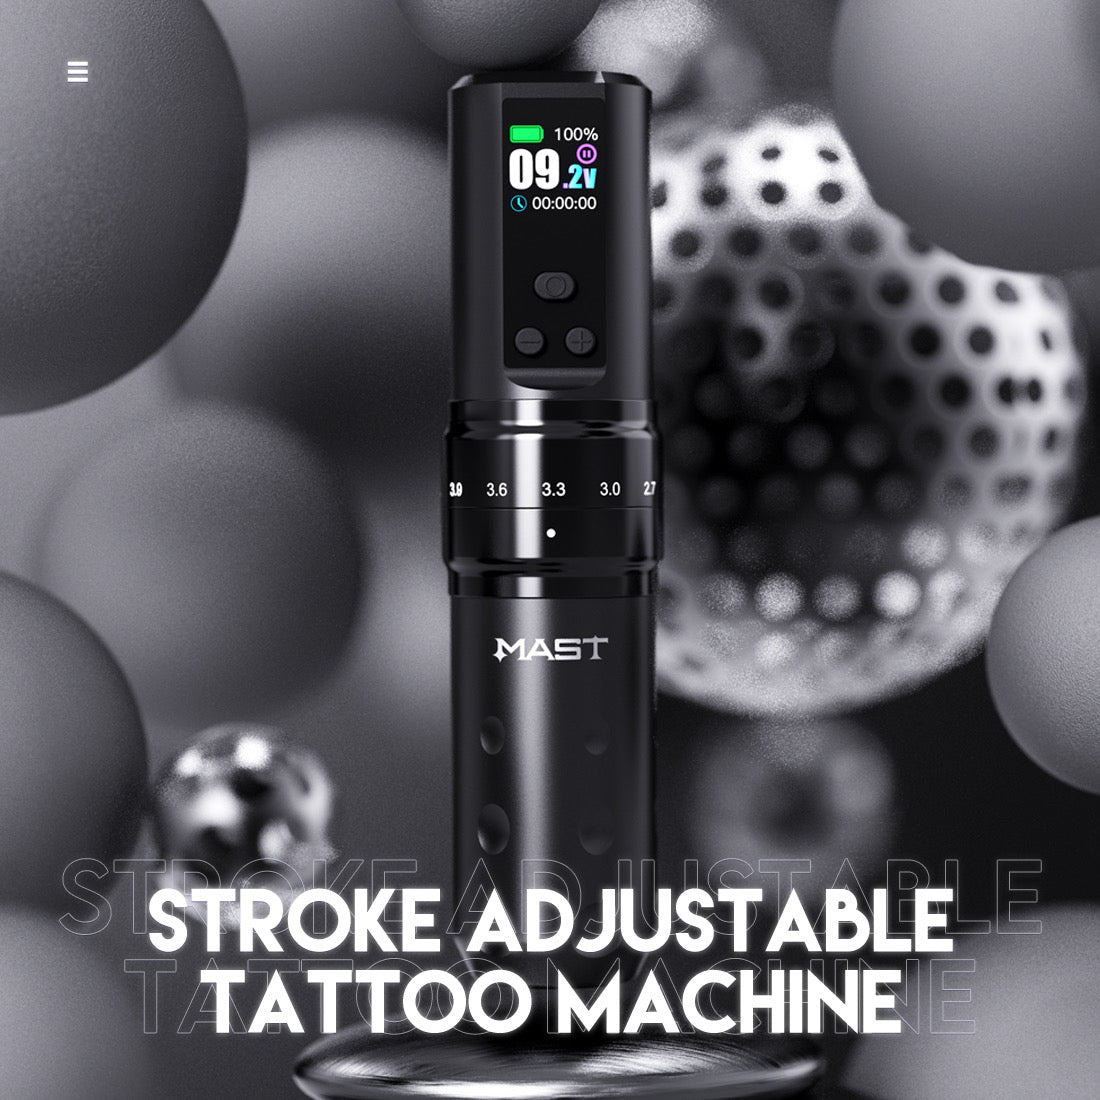 Dragonhawk Wireless Tattoo Pen Machine 2.4-4.2MM Strokes Length | Mast Fold 2 Pro